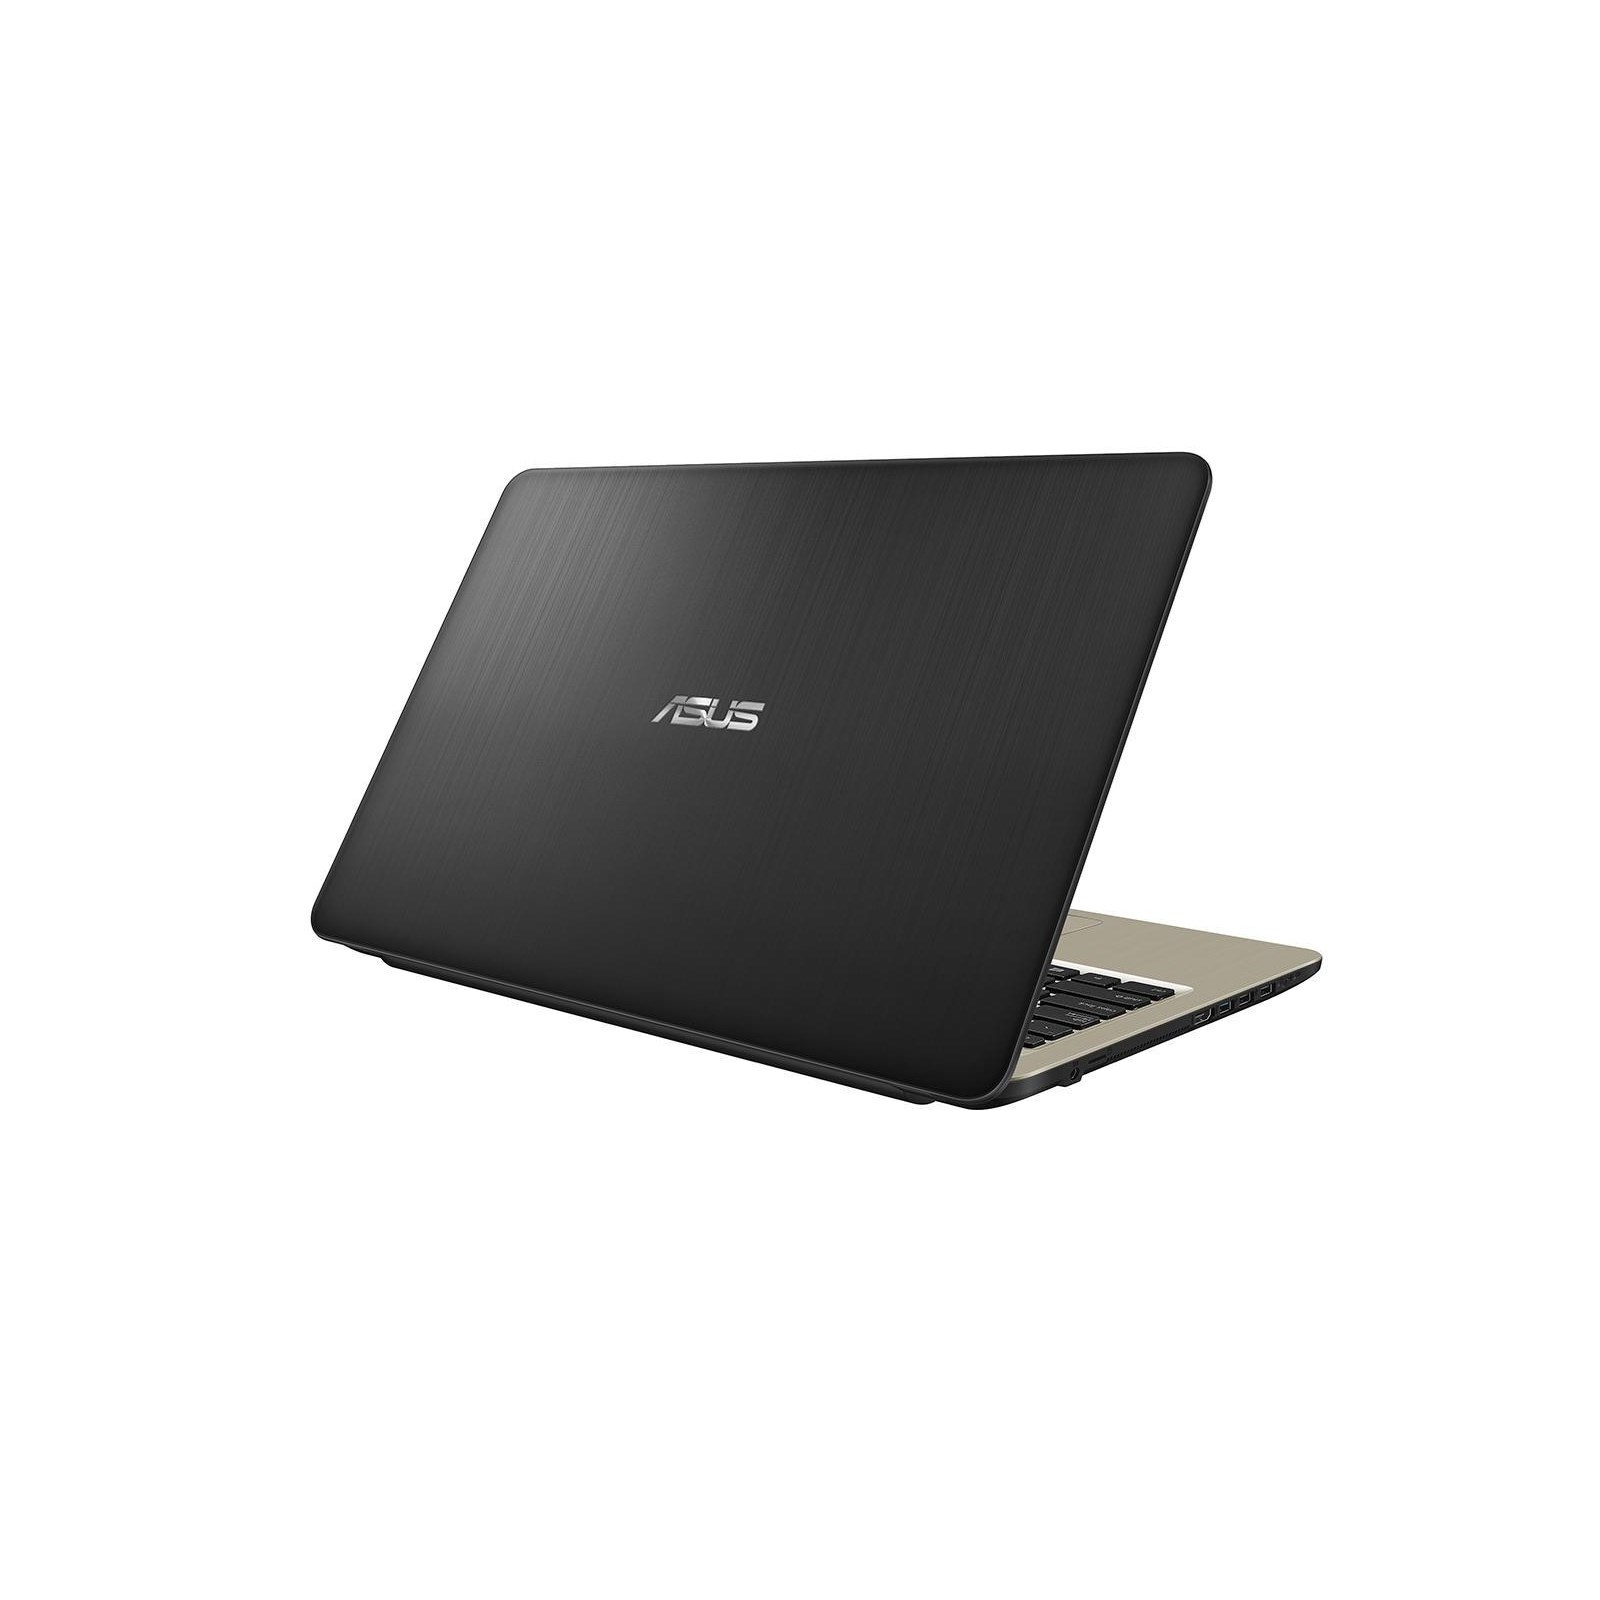 Asus Vivobook 15 X540ua 156 8gb Core I5 Laptop X540ua Gq024t Ccl